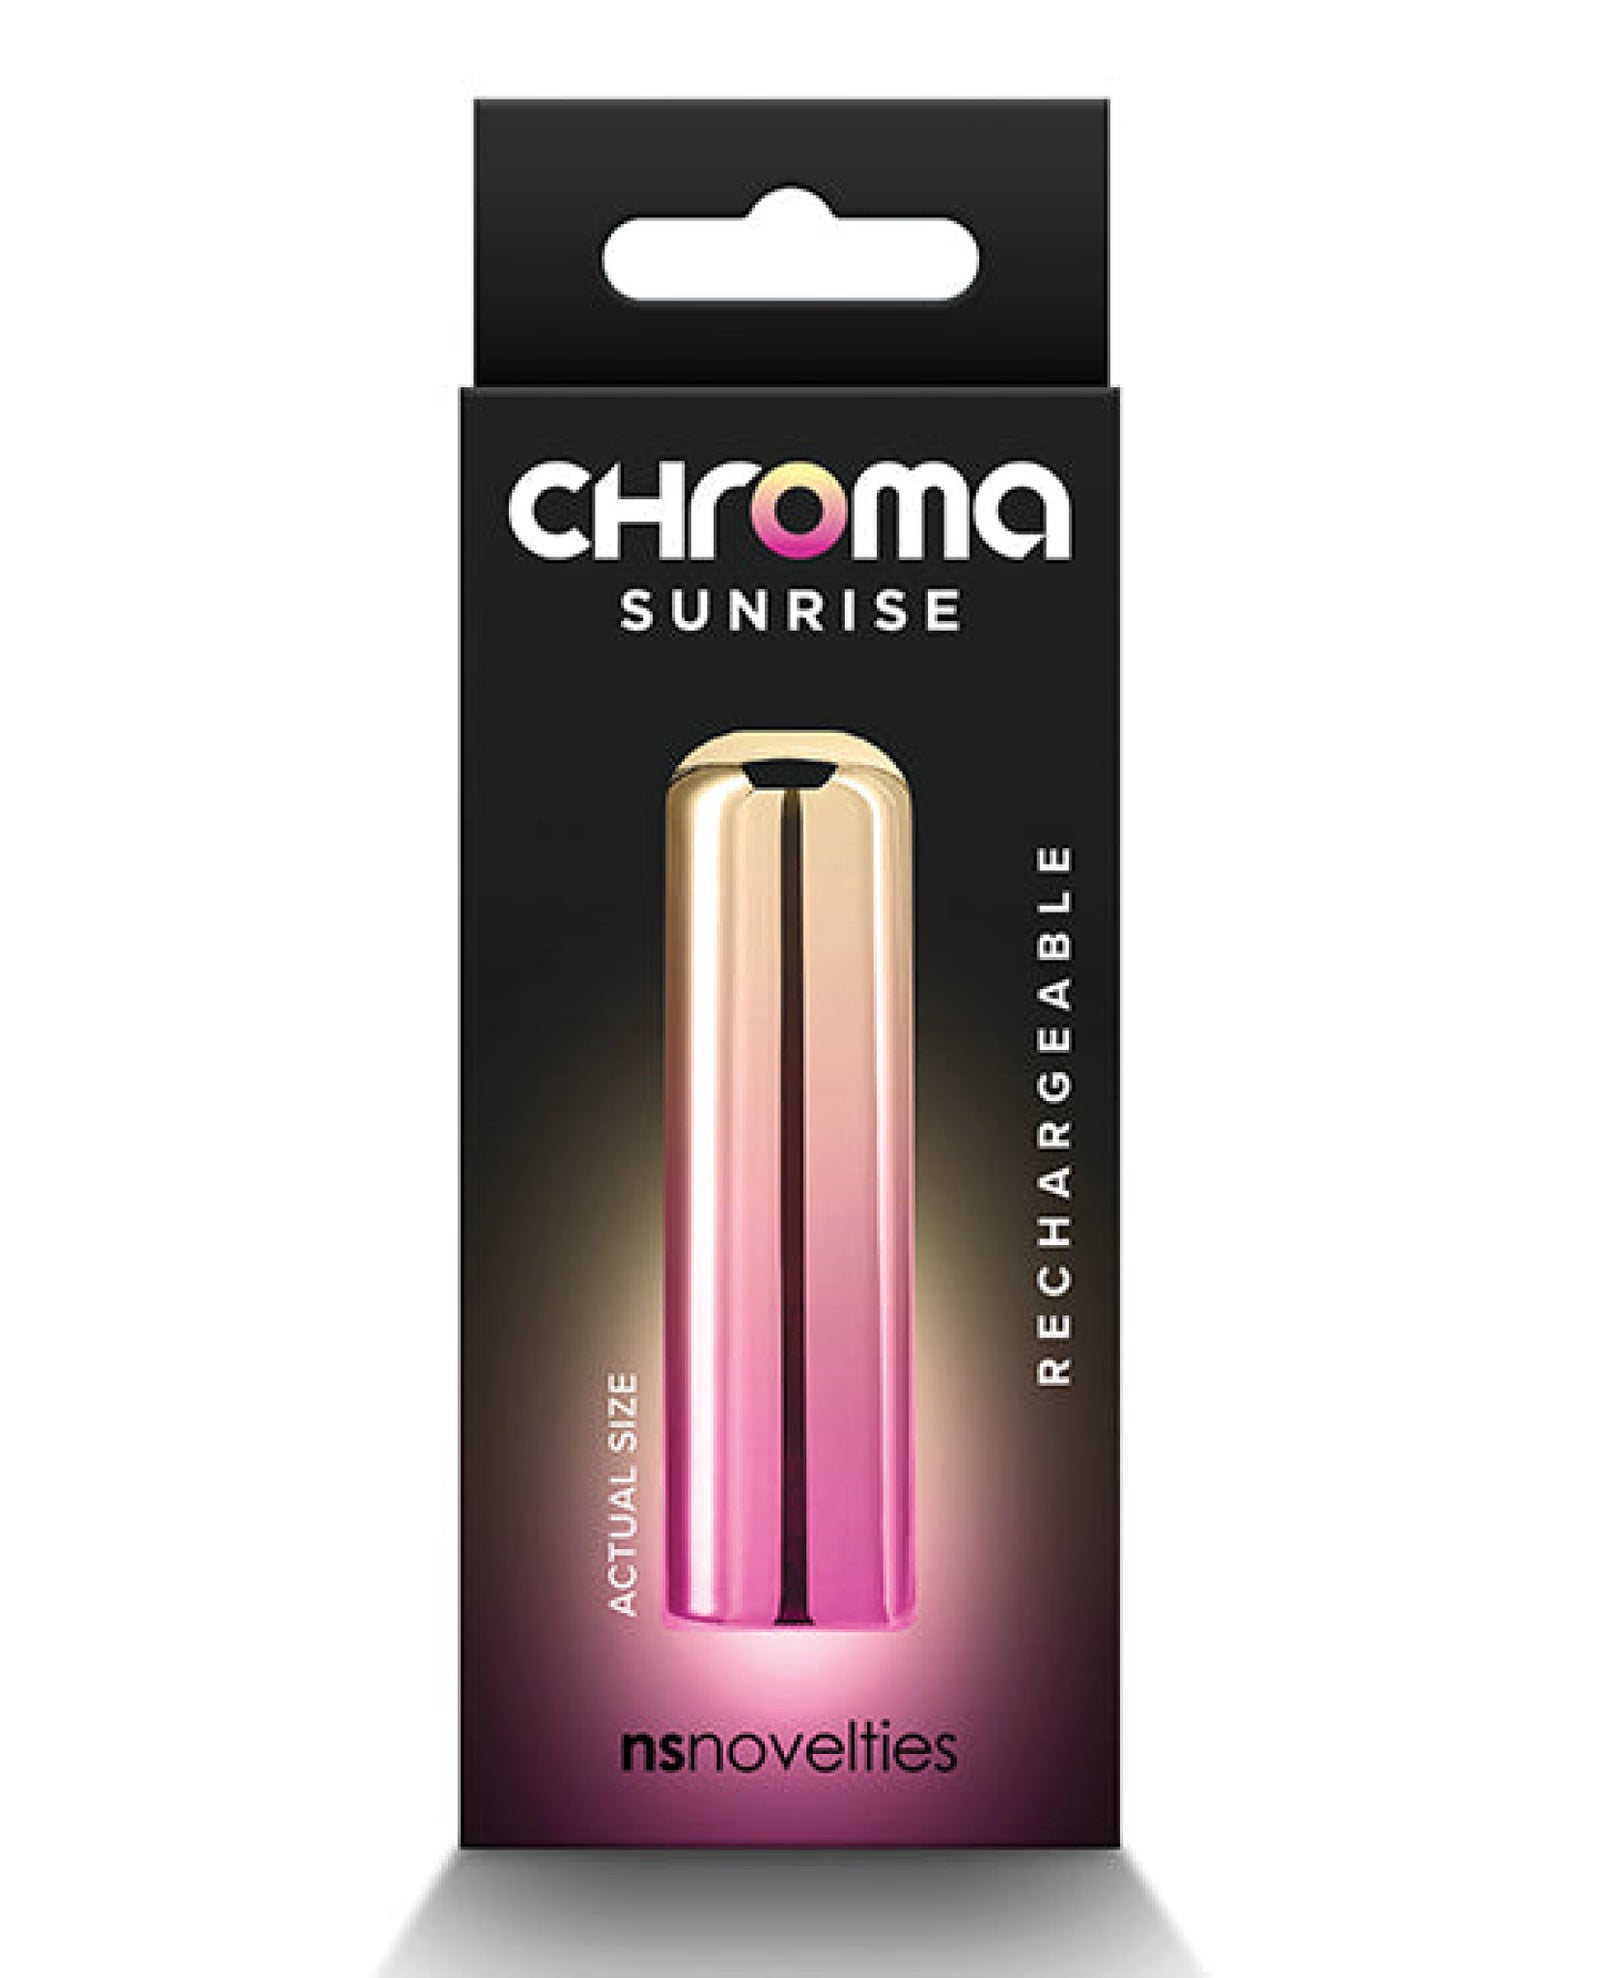 Chroma Sunrise - Pink/gold Chroma